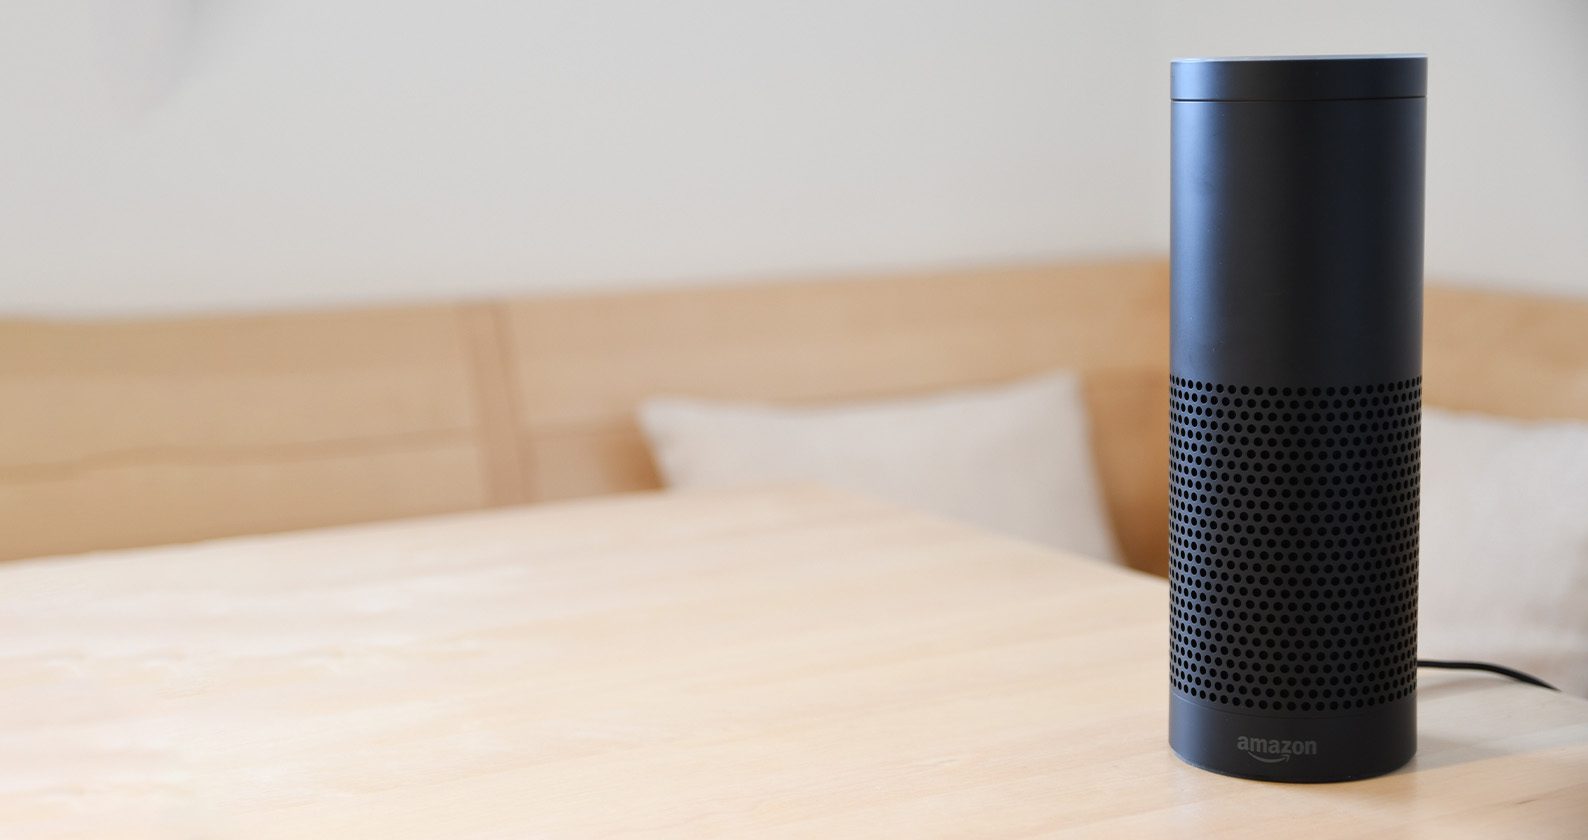 Amazon Alexa device on a wooden table.